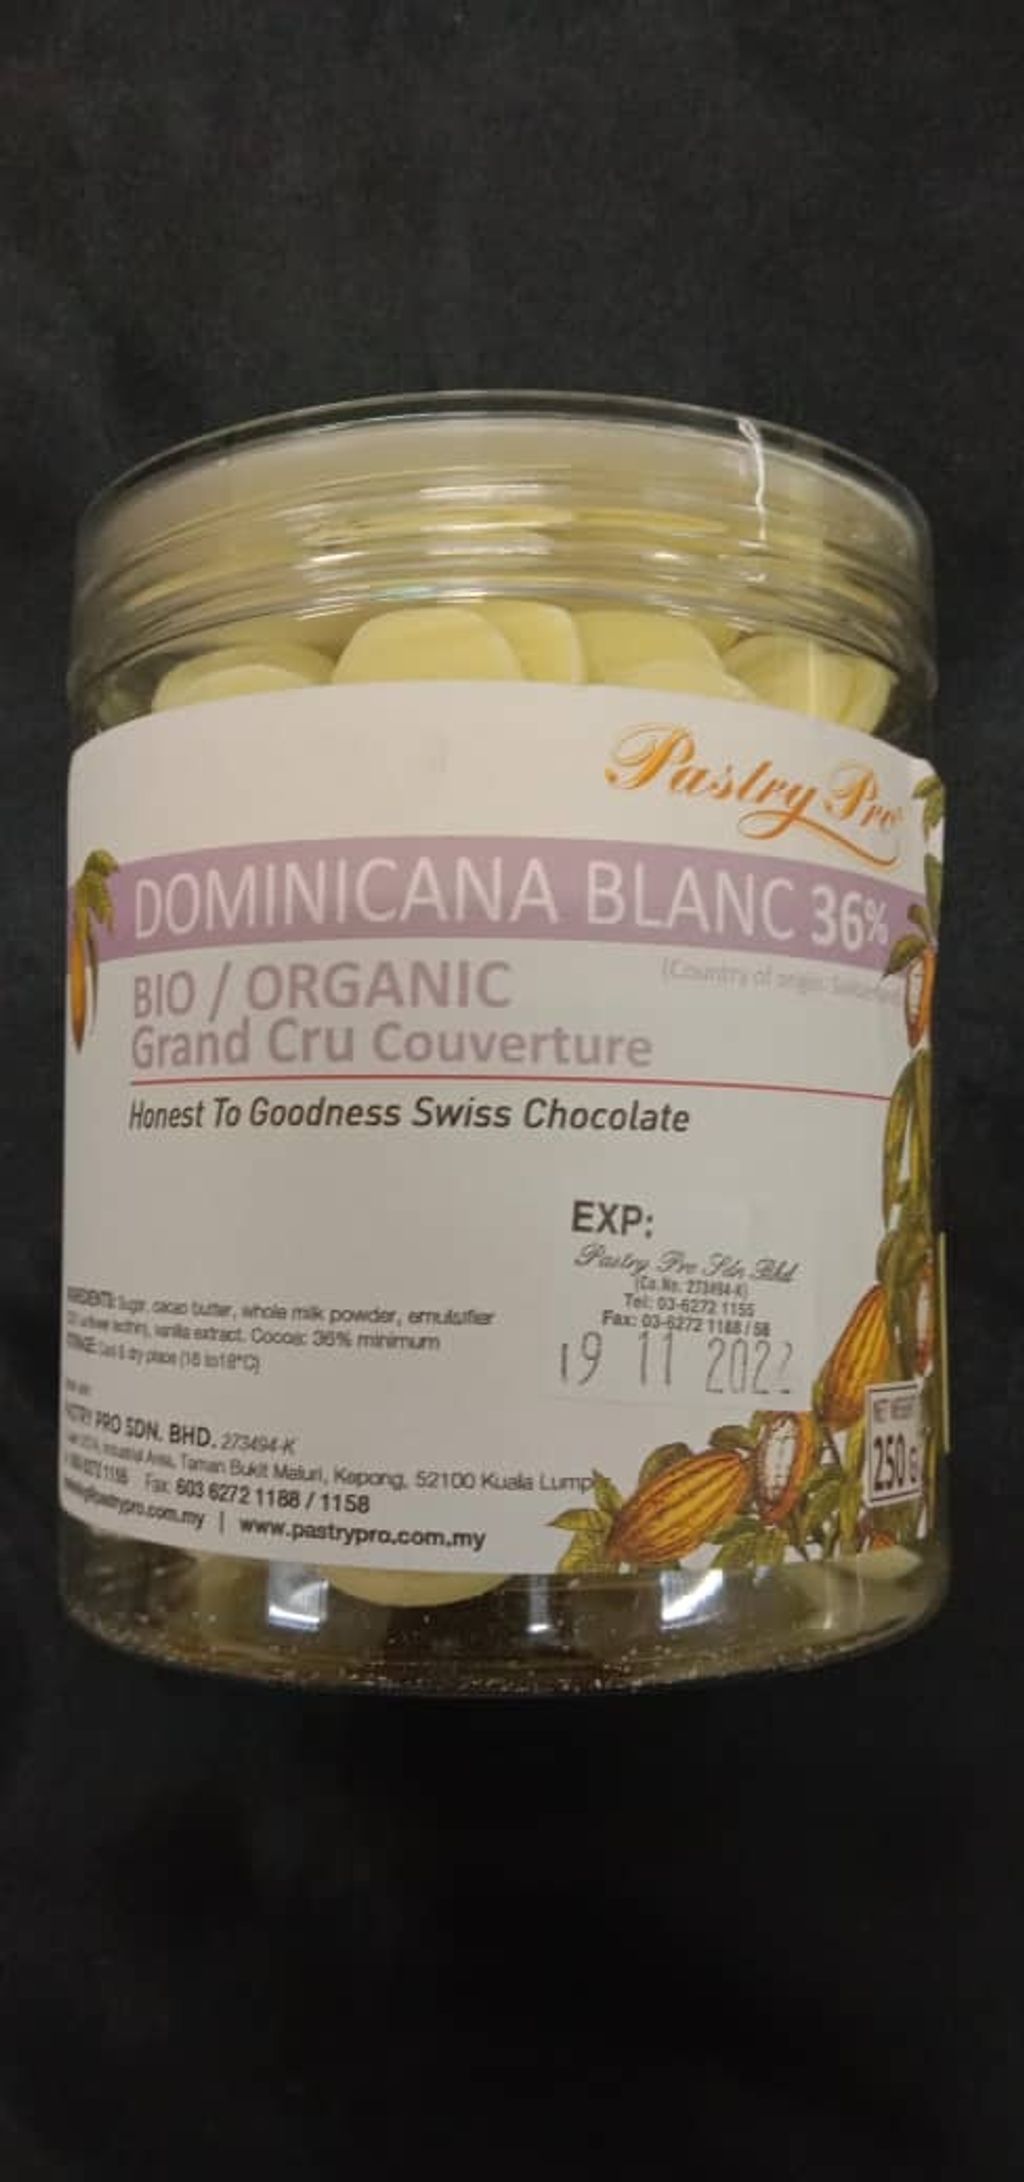 Dominicana Blanc 36%.jpg